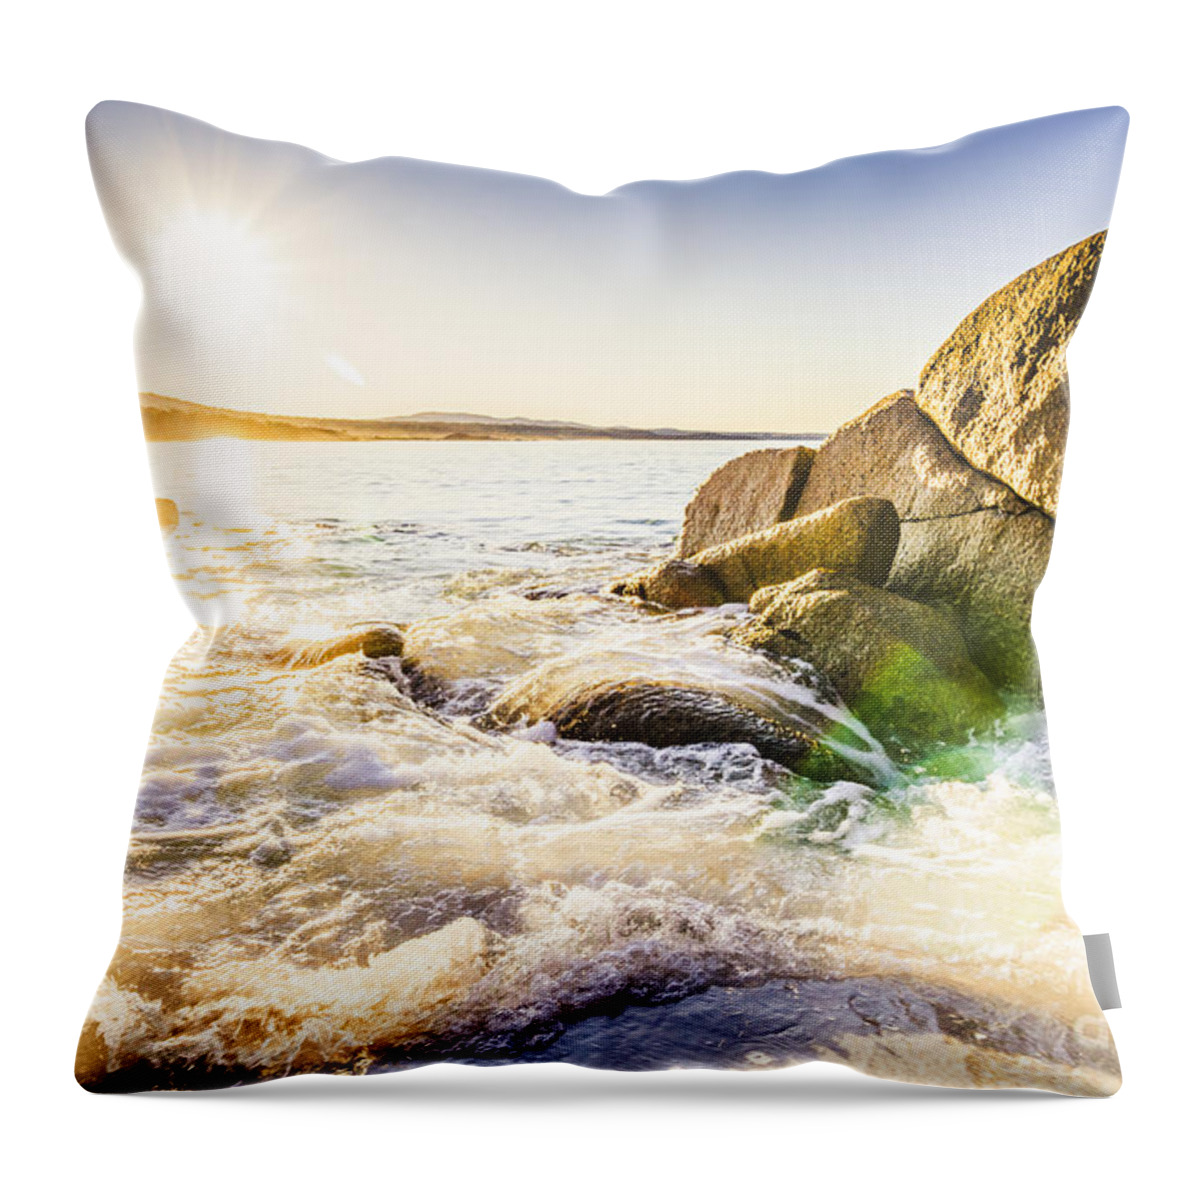 Premium Throw Pillow featuring the photograph Perfect Tasmania holiday destination by Jorgo Photography